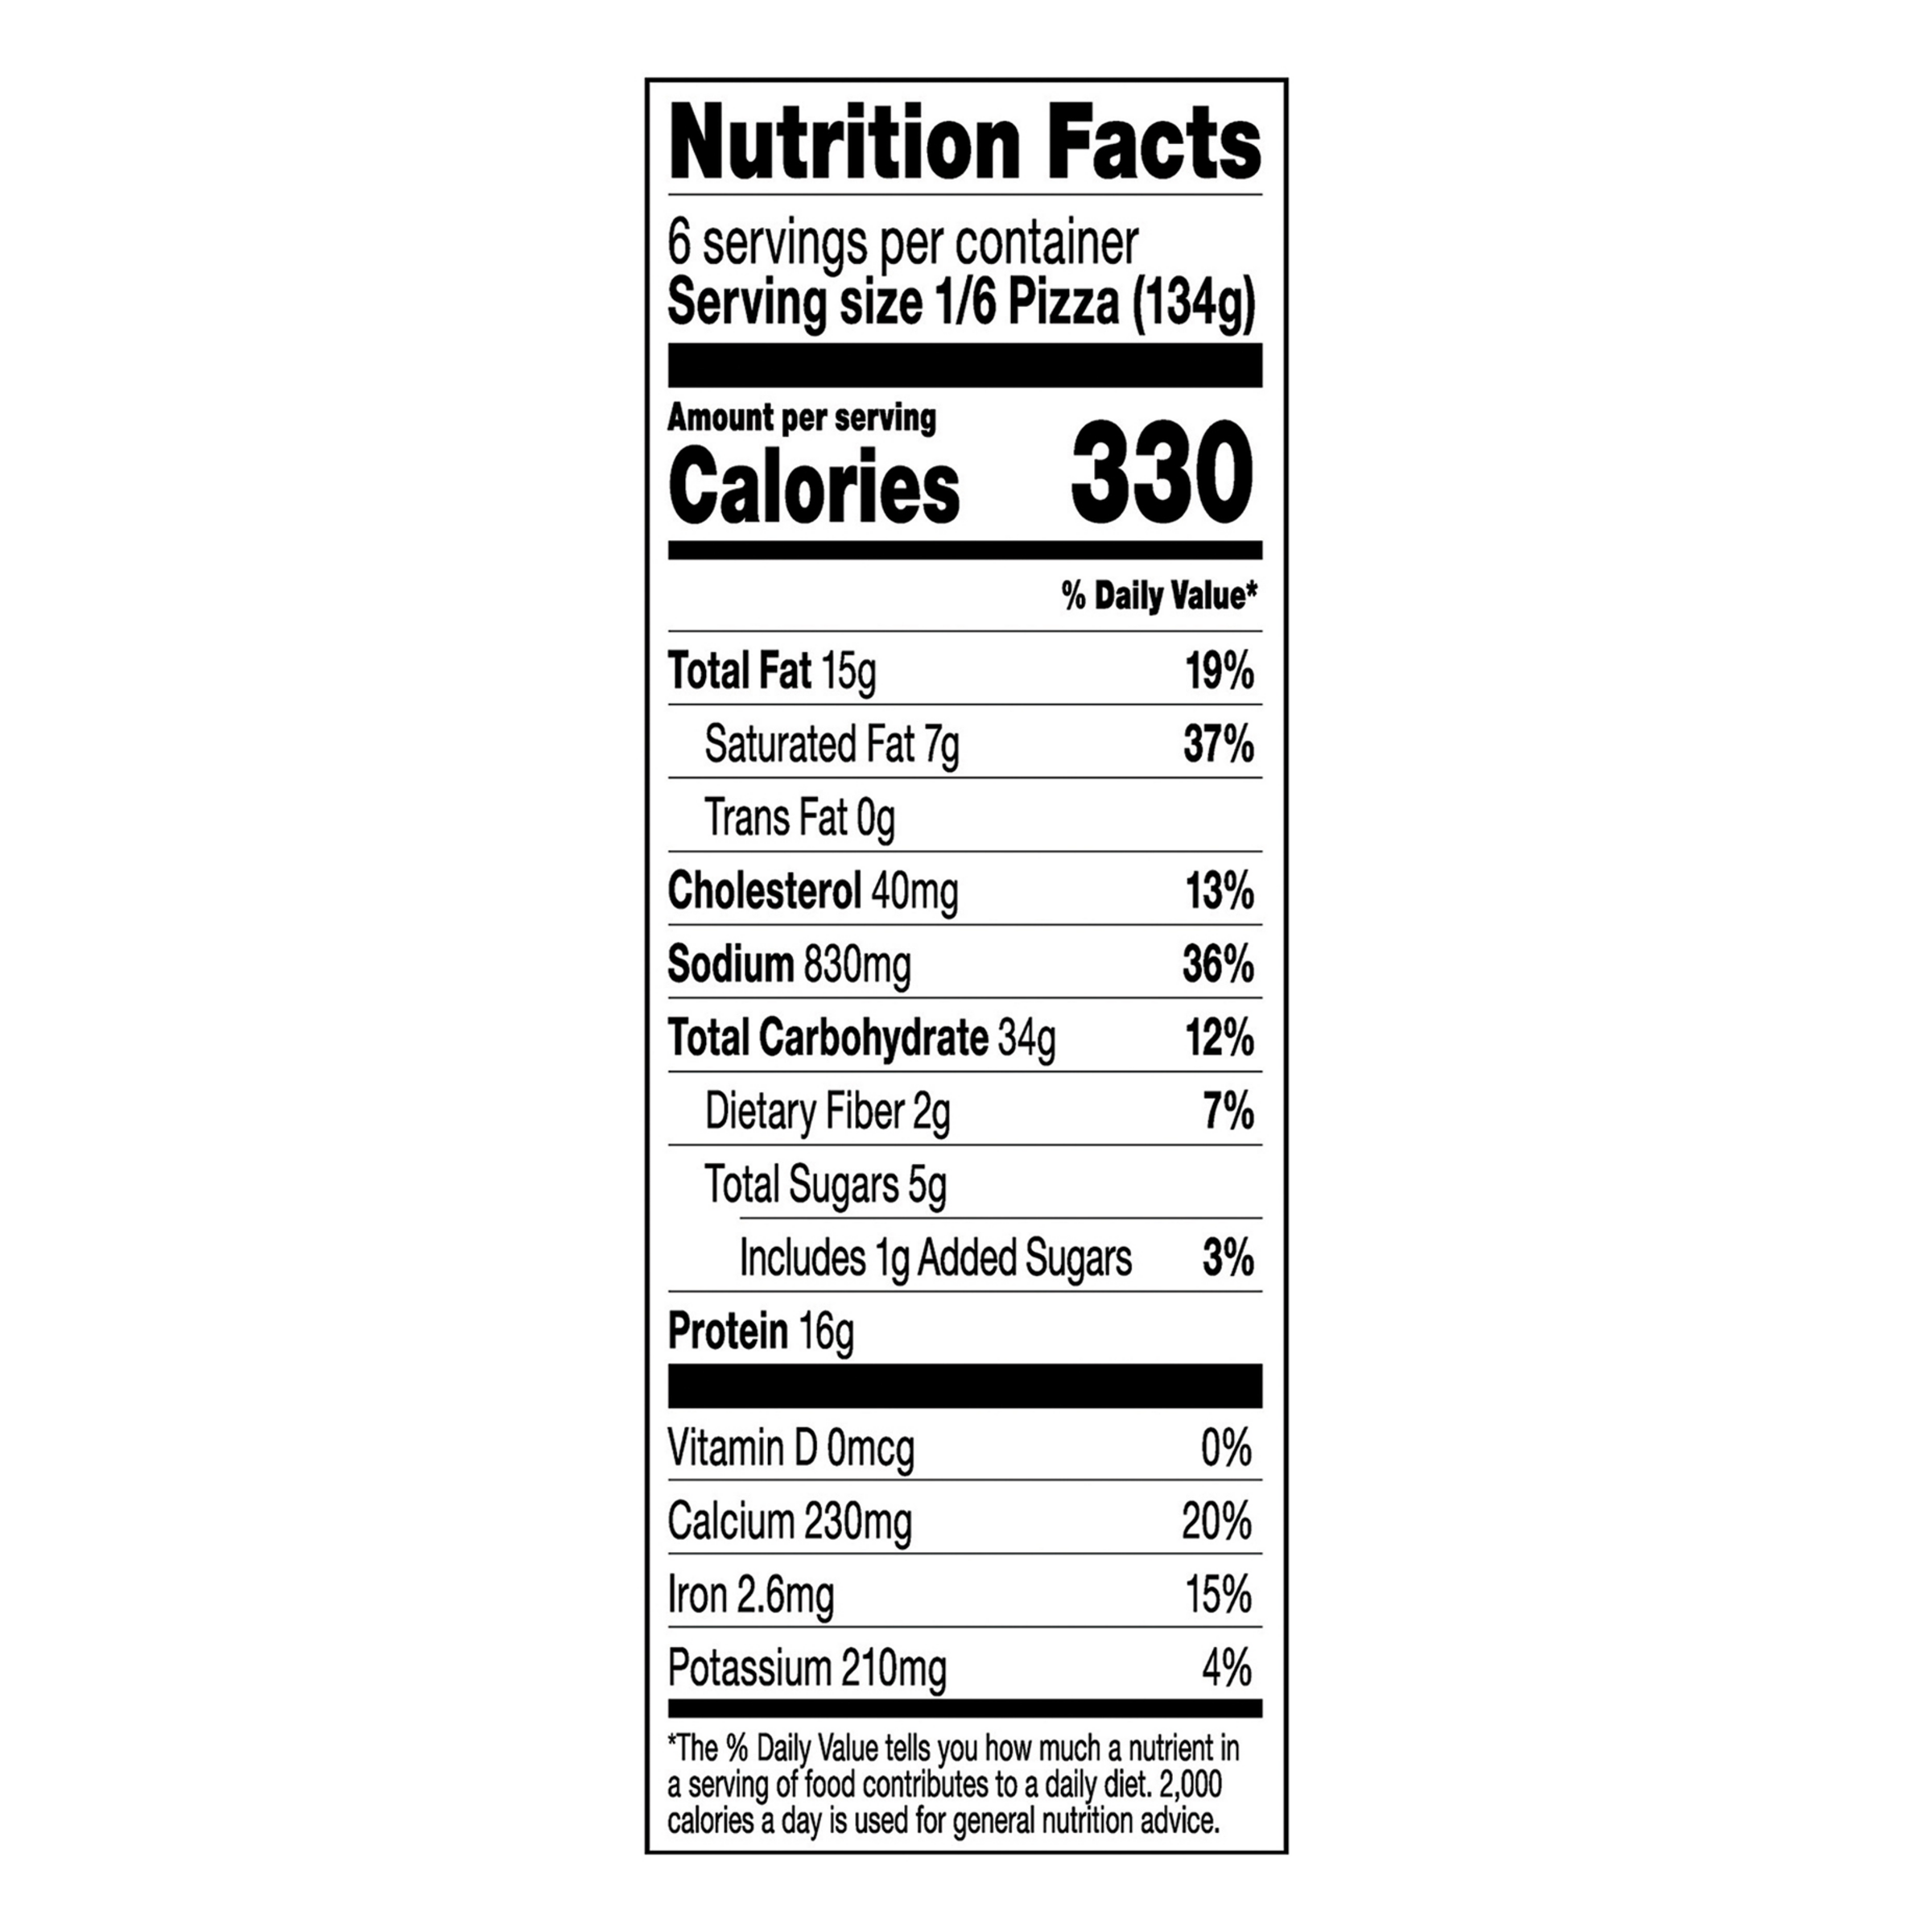 Nutrition Facts Serving Size 1/6 Pizza (134g)
				Servings per container	6
				Calories 330
				Total Fat 15 g
				% DV 19%
				Saturated Fat 7 g
				% DV 37%
				Trans Fat 0 g
				Cholesterol 40 mg
				% DV 13%
				Sodium	830 mg
				% DV 36%
				Total Carbohydrate 34 g
				% DV 12%
				Dietary Fiber 2 g
				% DV 7%
				Total Sugars 5 g
				Added Sugars 1 g
				% DV 3%
				Protein	16 g	
				Vitamin D 0 MCG
				% DV 0%
				Calcium	 230 mg
				% DV 20%
				Iron 2.6 mg
				% DV 15%
				Potassium 210 mg
				% DV 4%